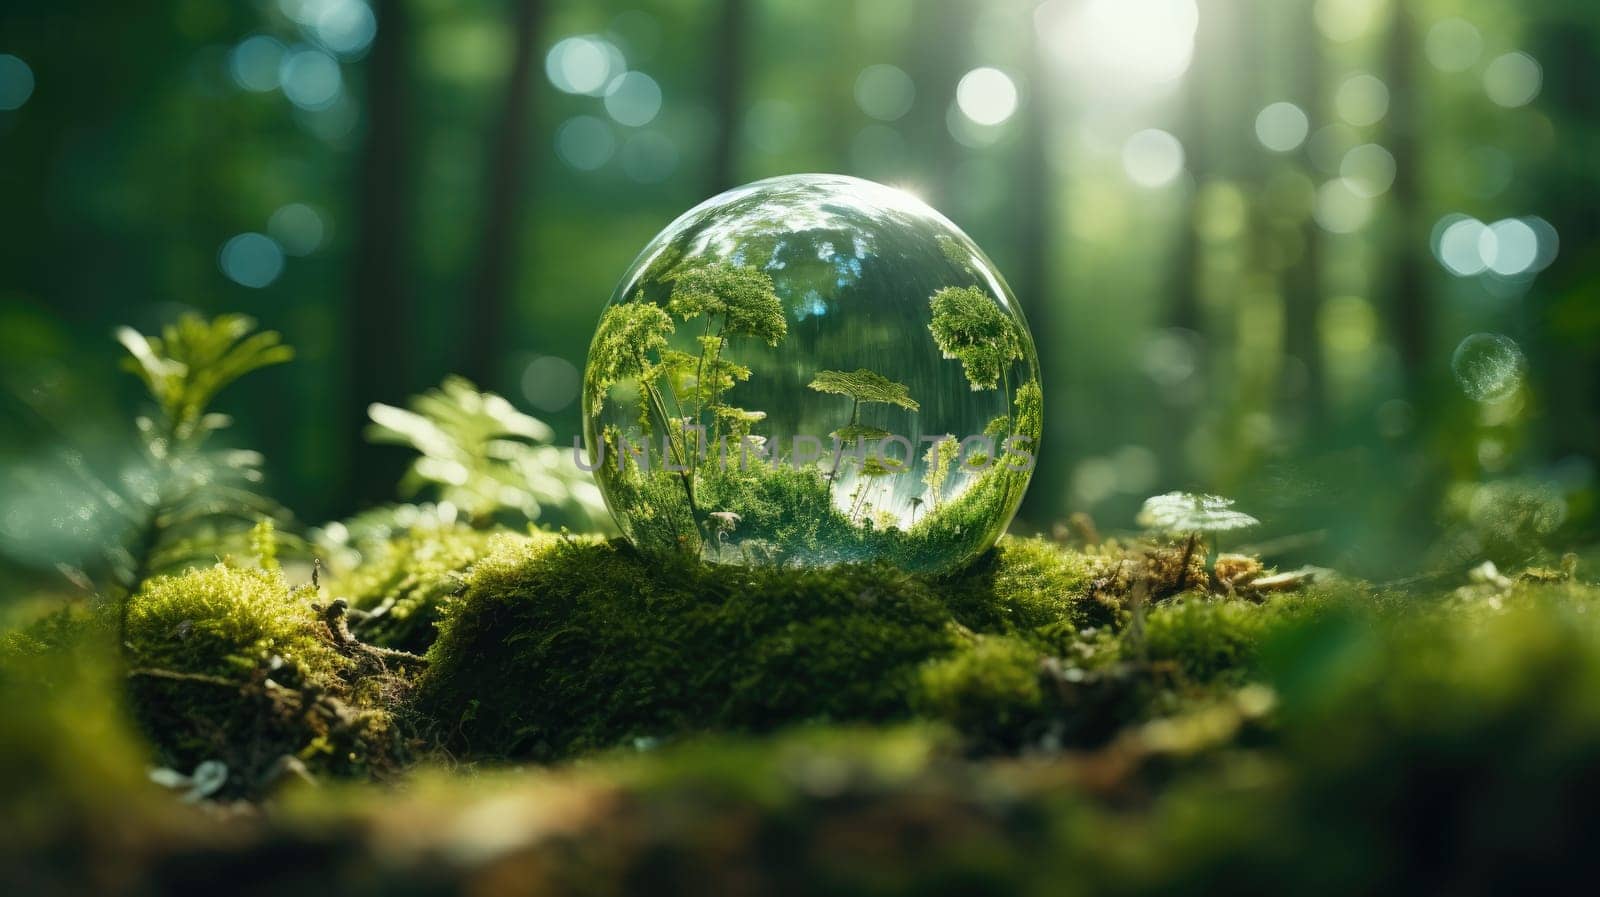 Crystal Globe Resting on Lush Moss. Global Sustainability. Crystal Globe Amidst Verdant Moss. Environment, Society, Governance: Crystal Globe on Moss by ViShark